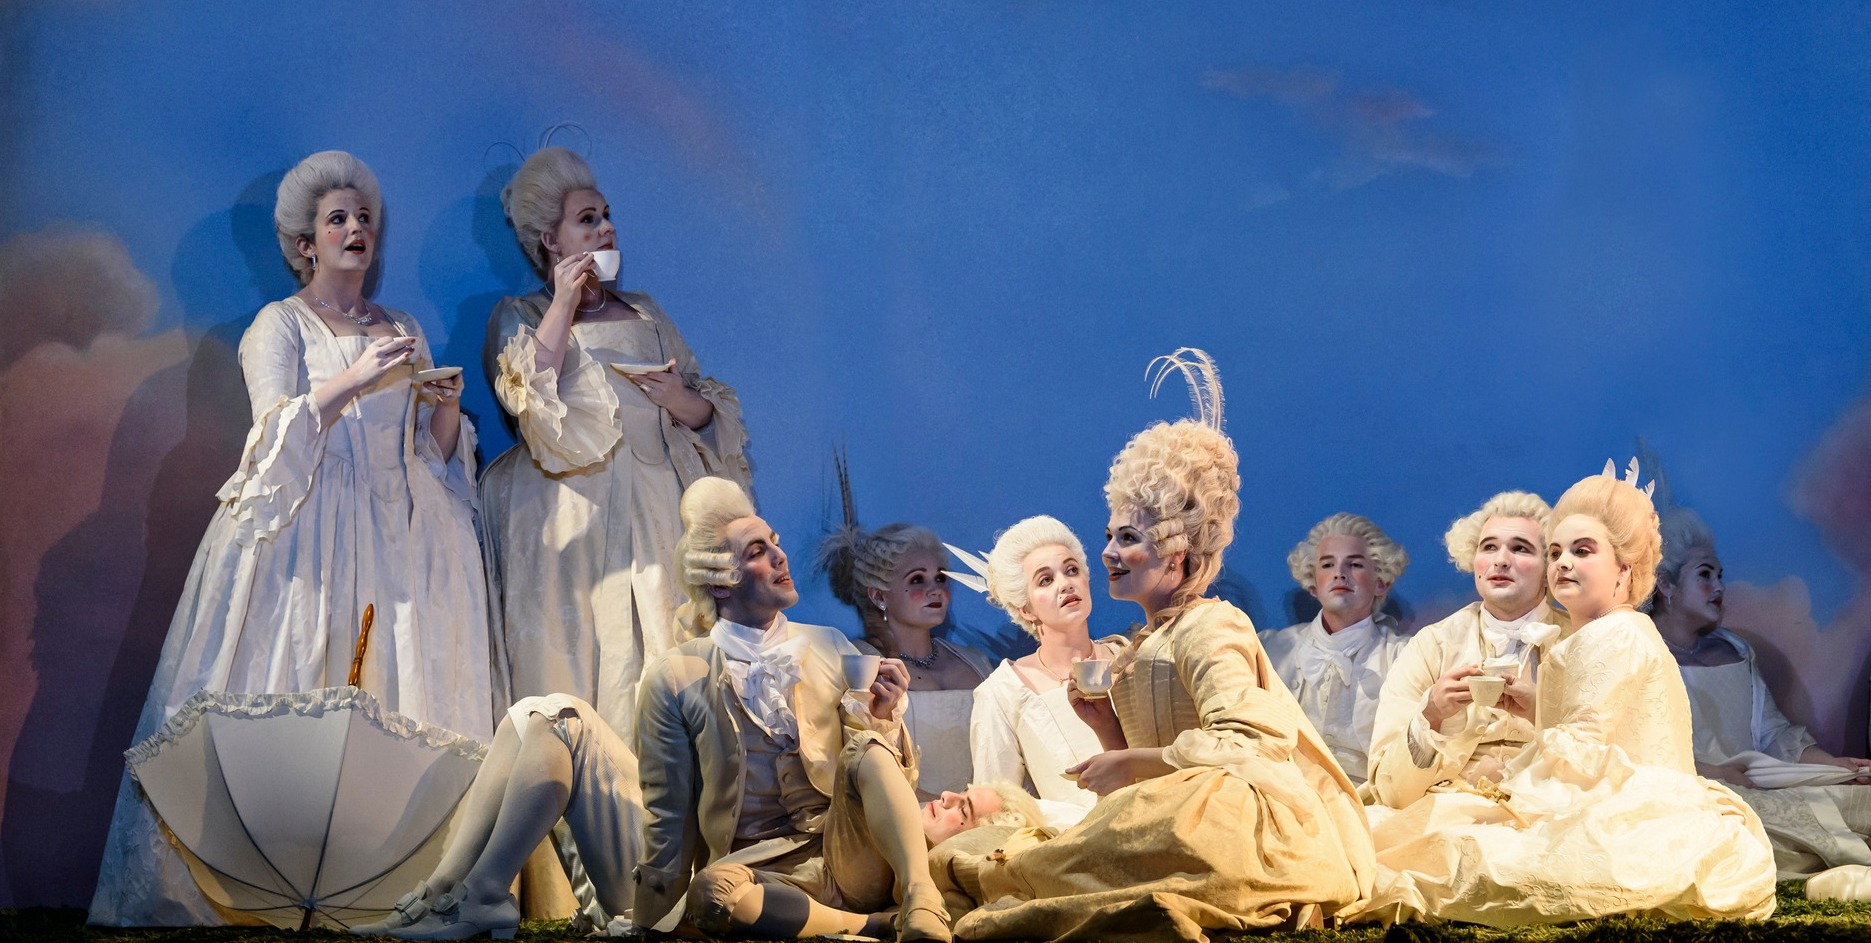 The Glyndebourne Festival: The UK’s Spiritual Home of Opera